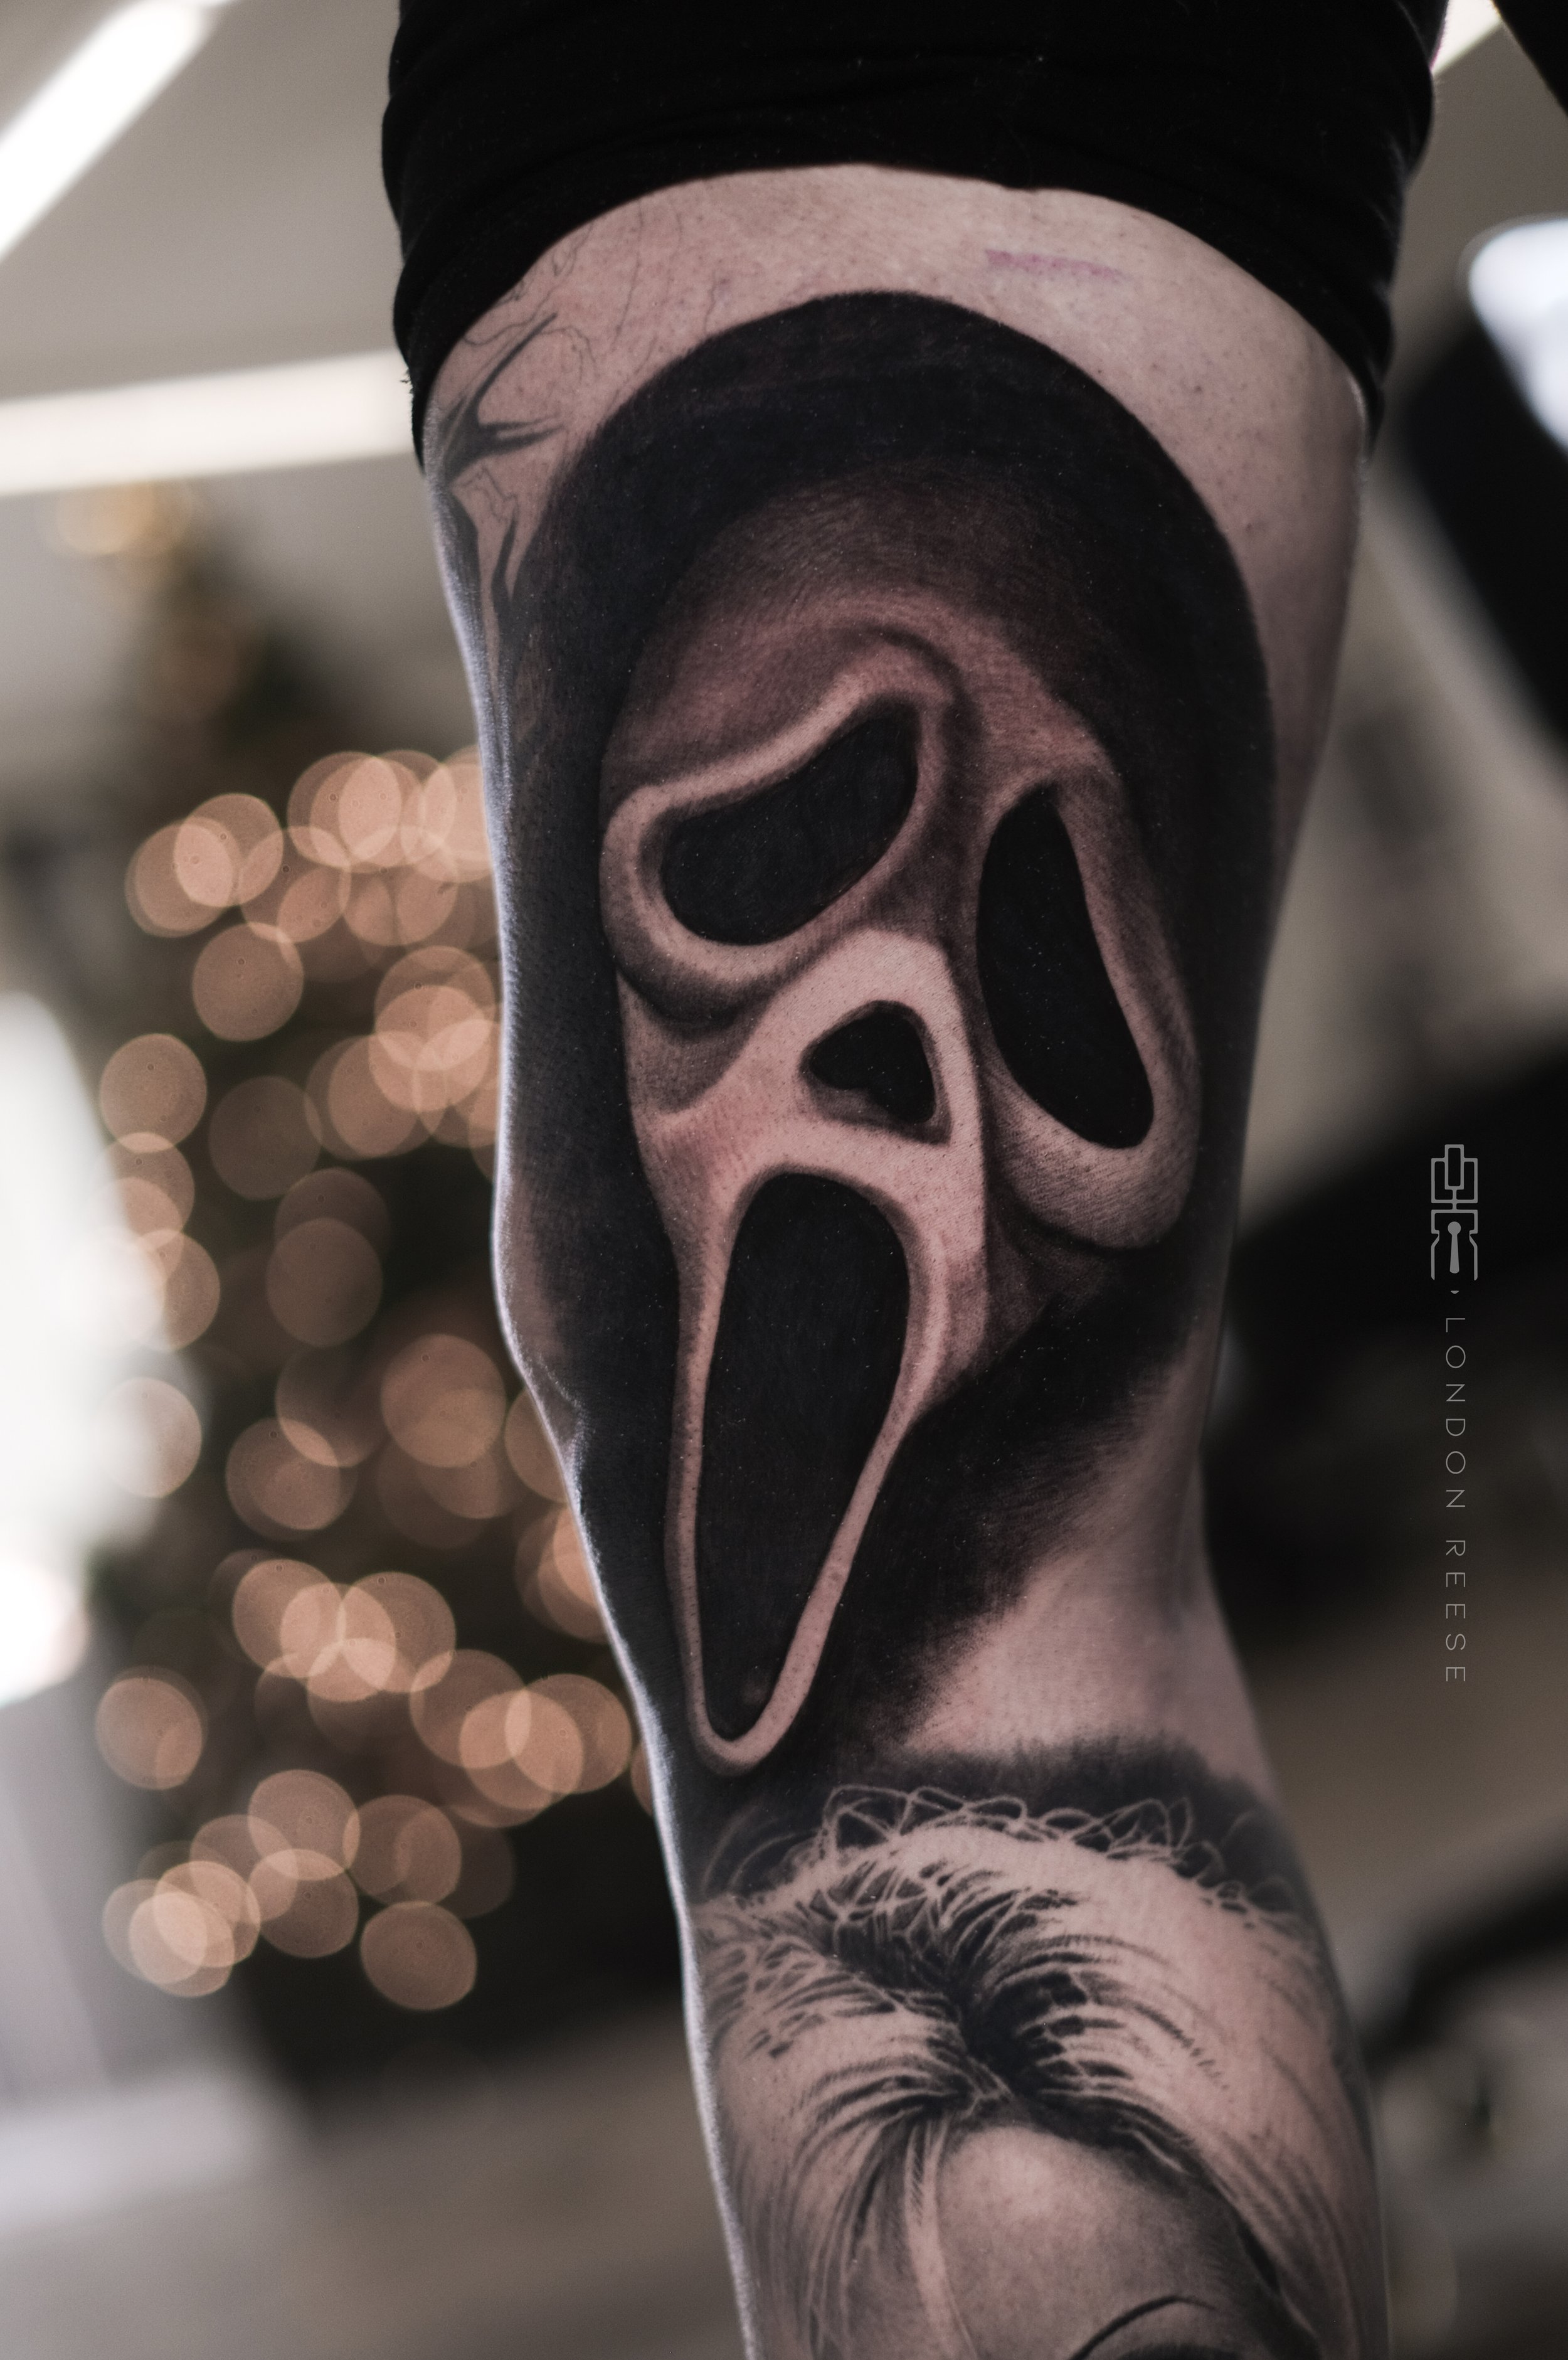 ghostface scream mask tattoo knee.jpg